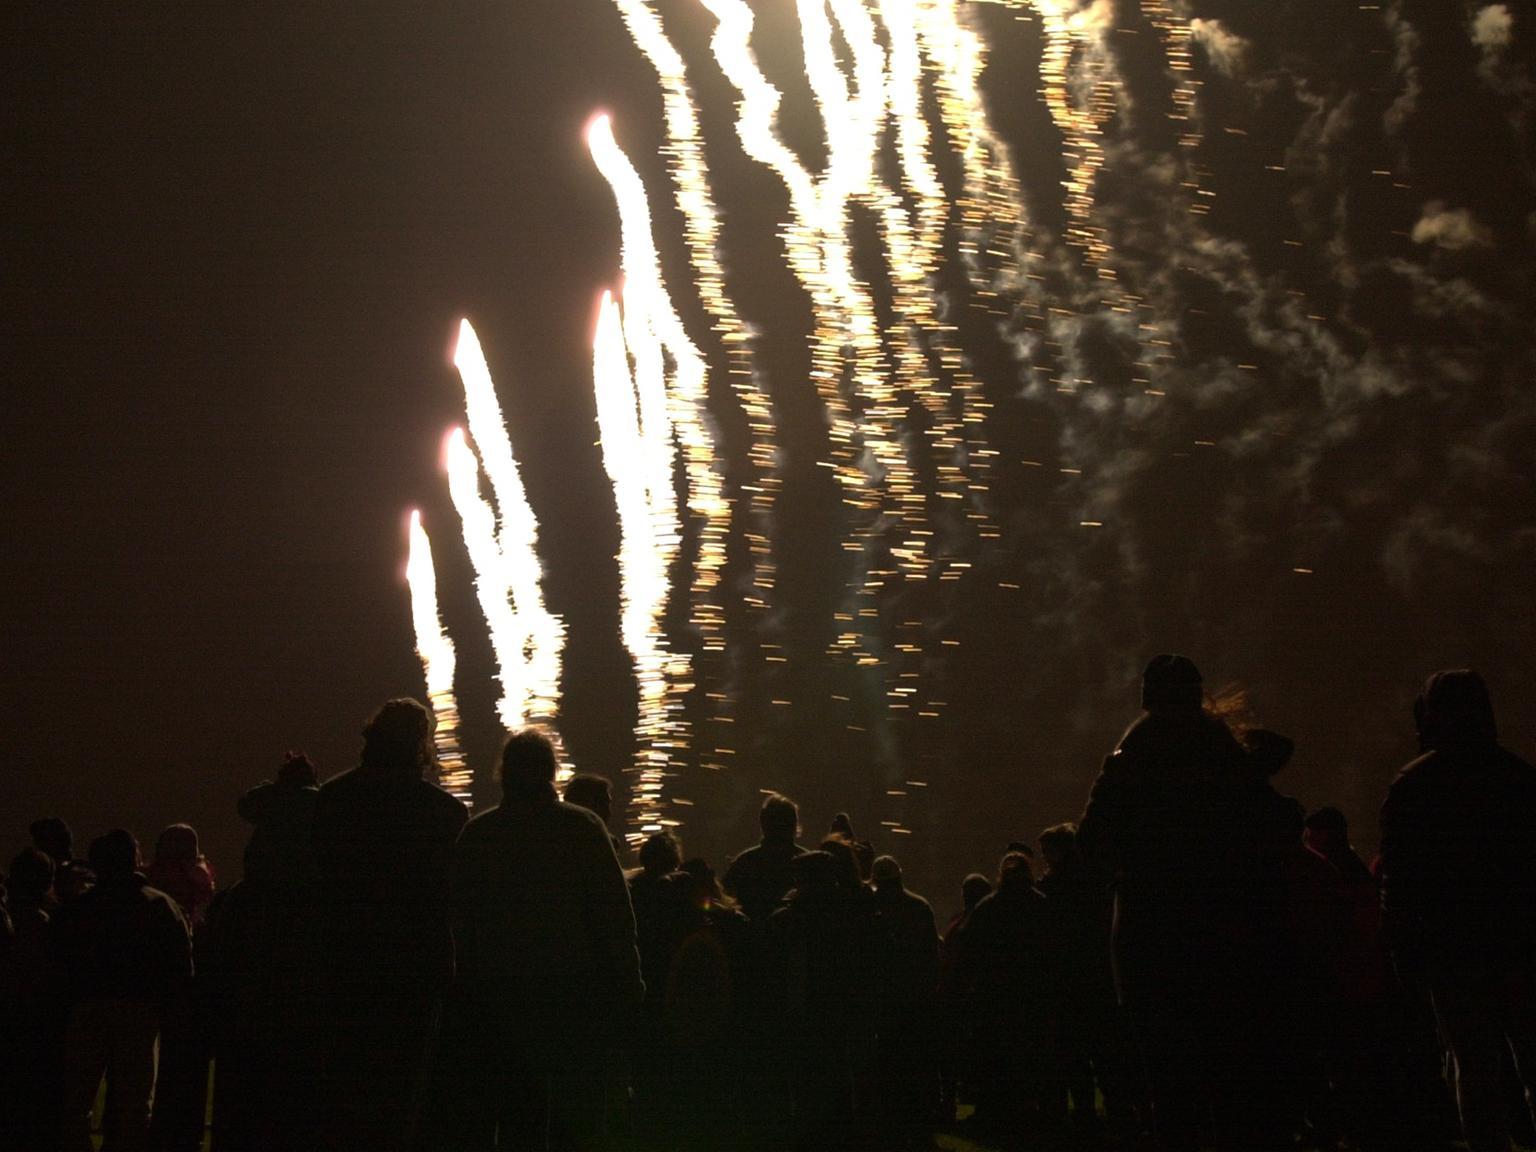 Spectators enjoy the fireworks at Bramley Park.